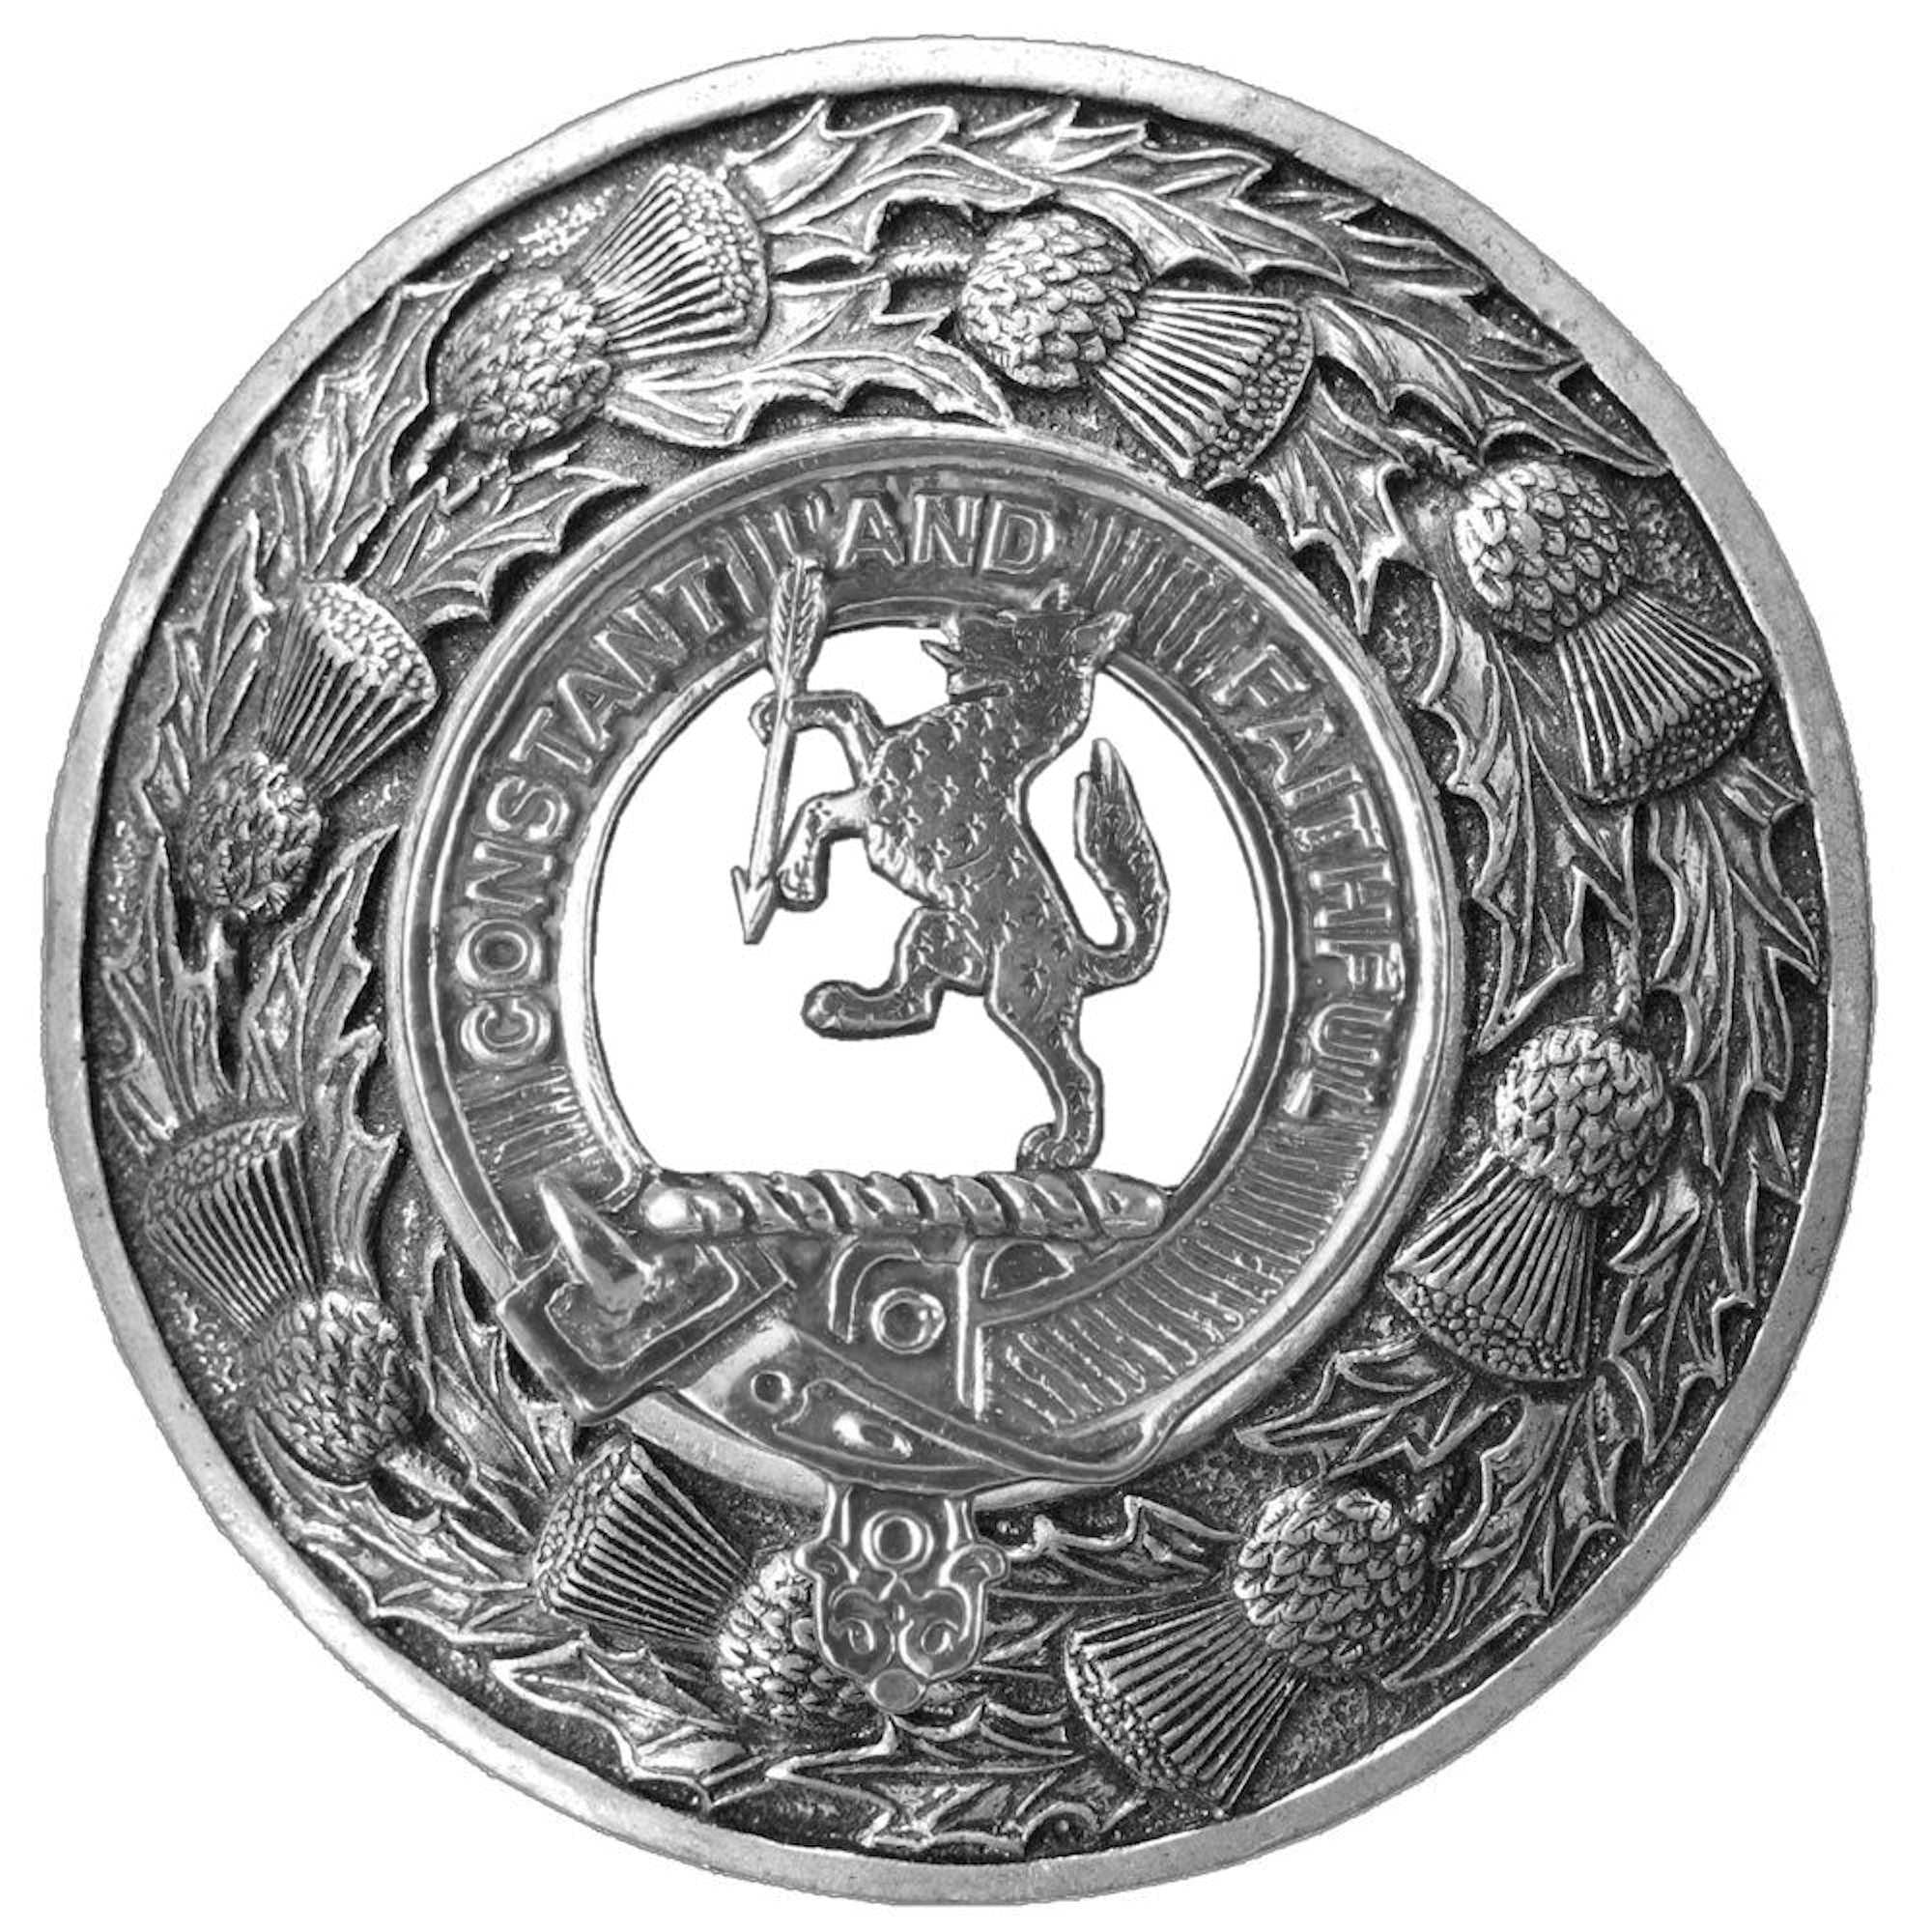 MacQueen Clan Badge Scottish Plaid Brooch